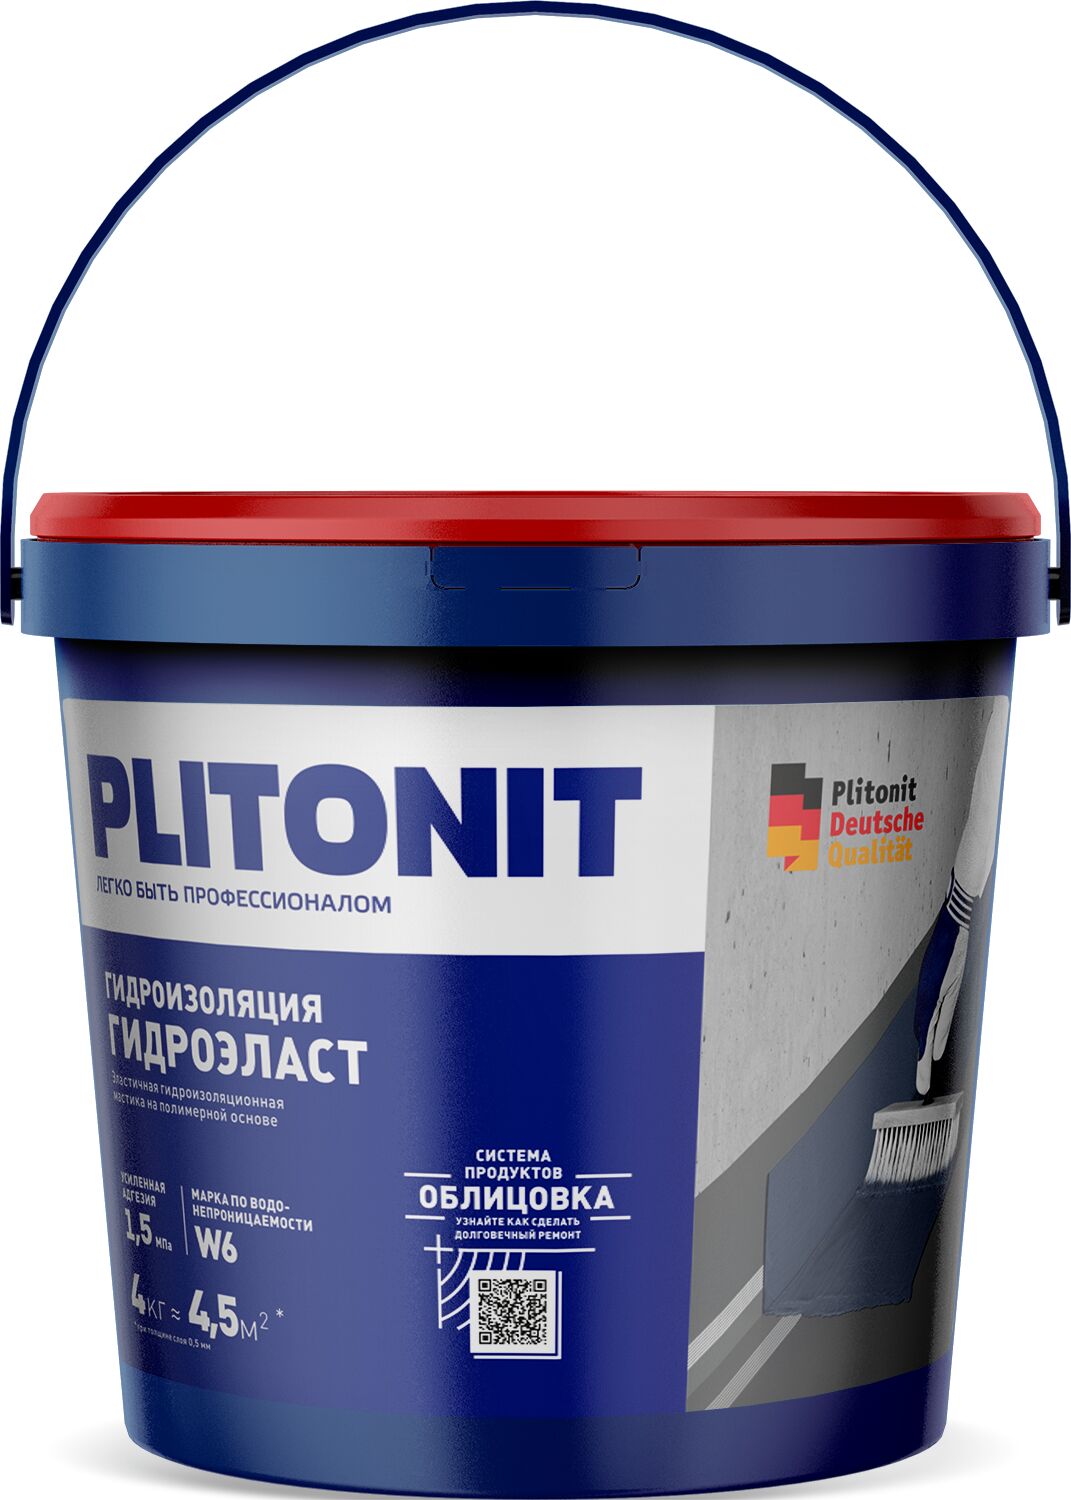 PLITONIT ГидроЭласт -4 эластичная гидроизоляционная мастика 